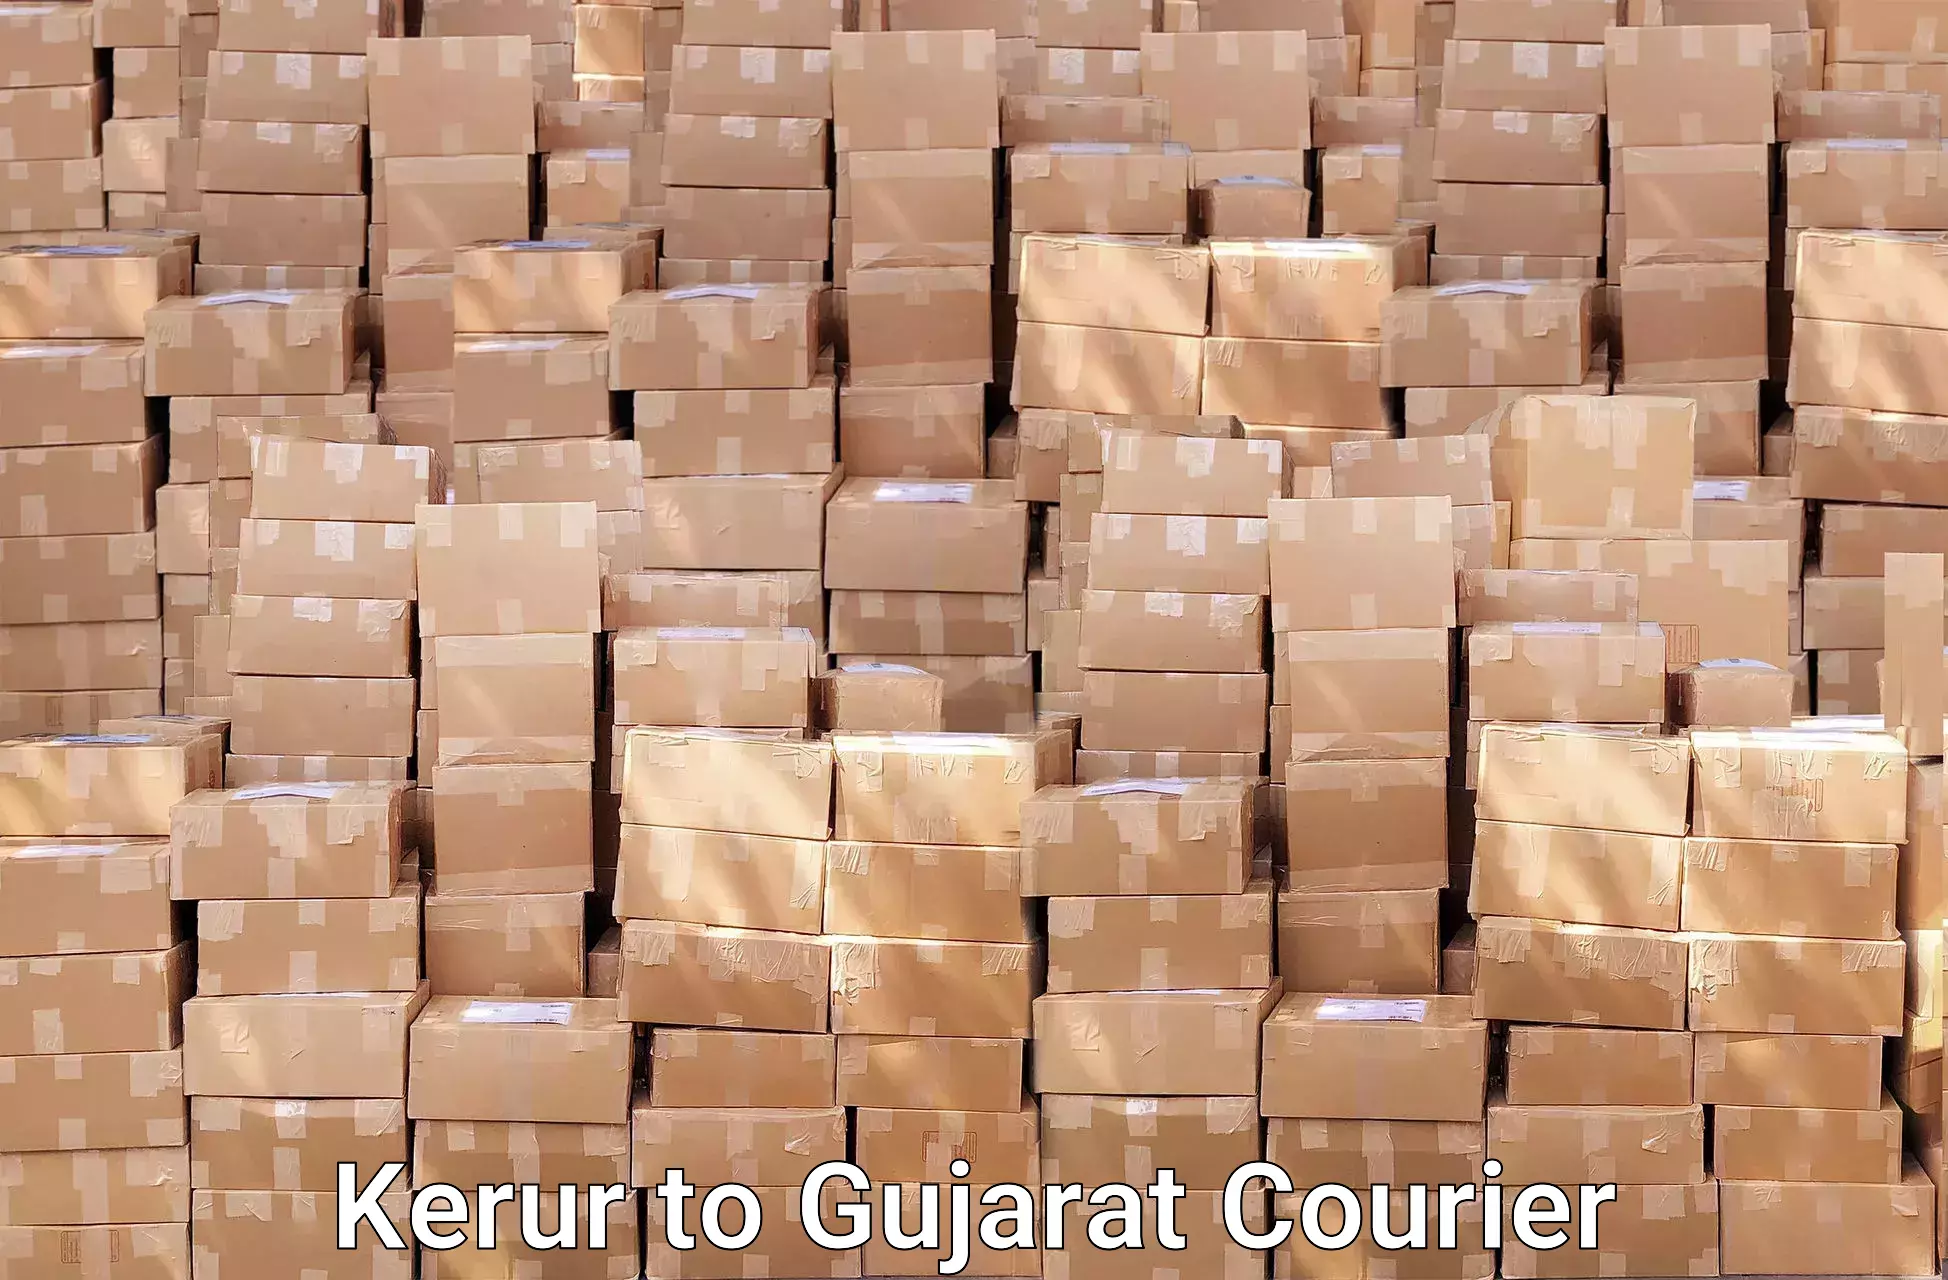 Efficient moving company Kerur to Gujarat